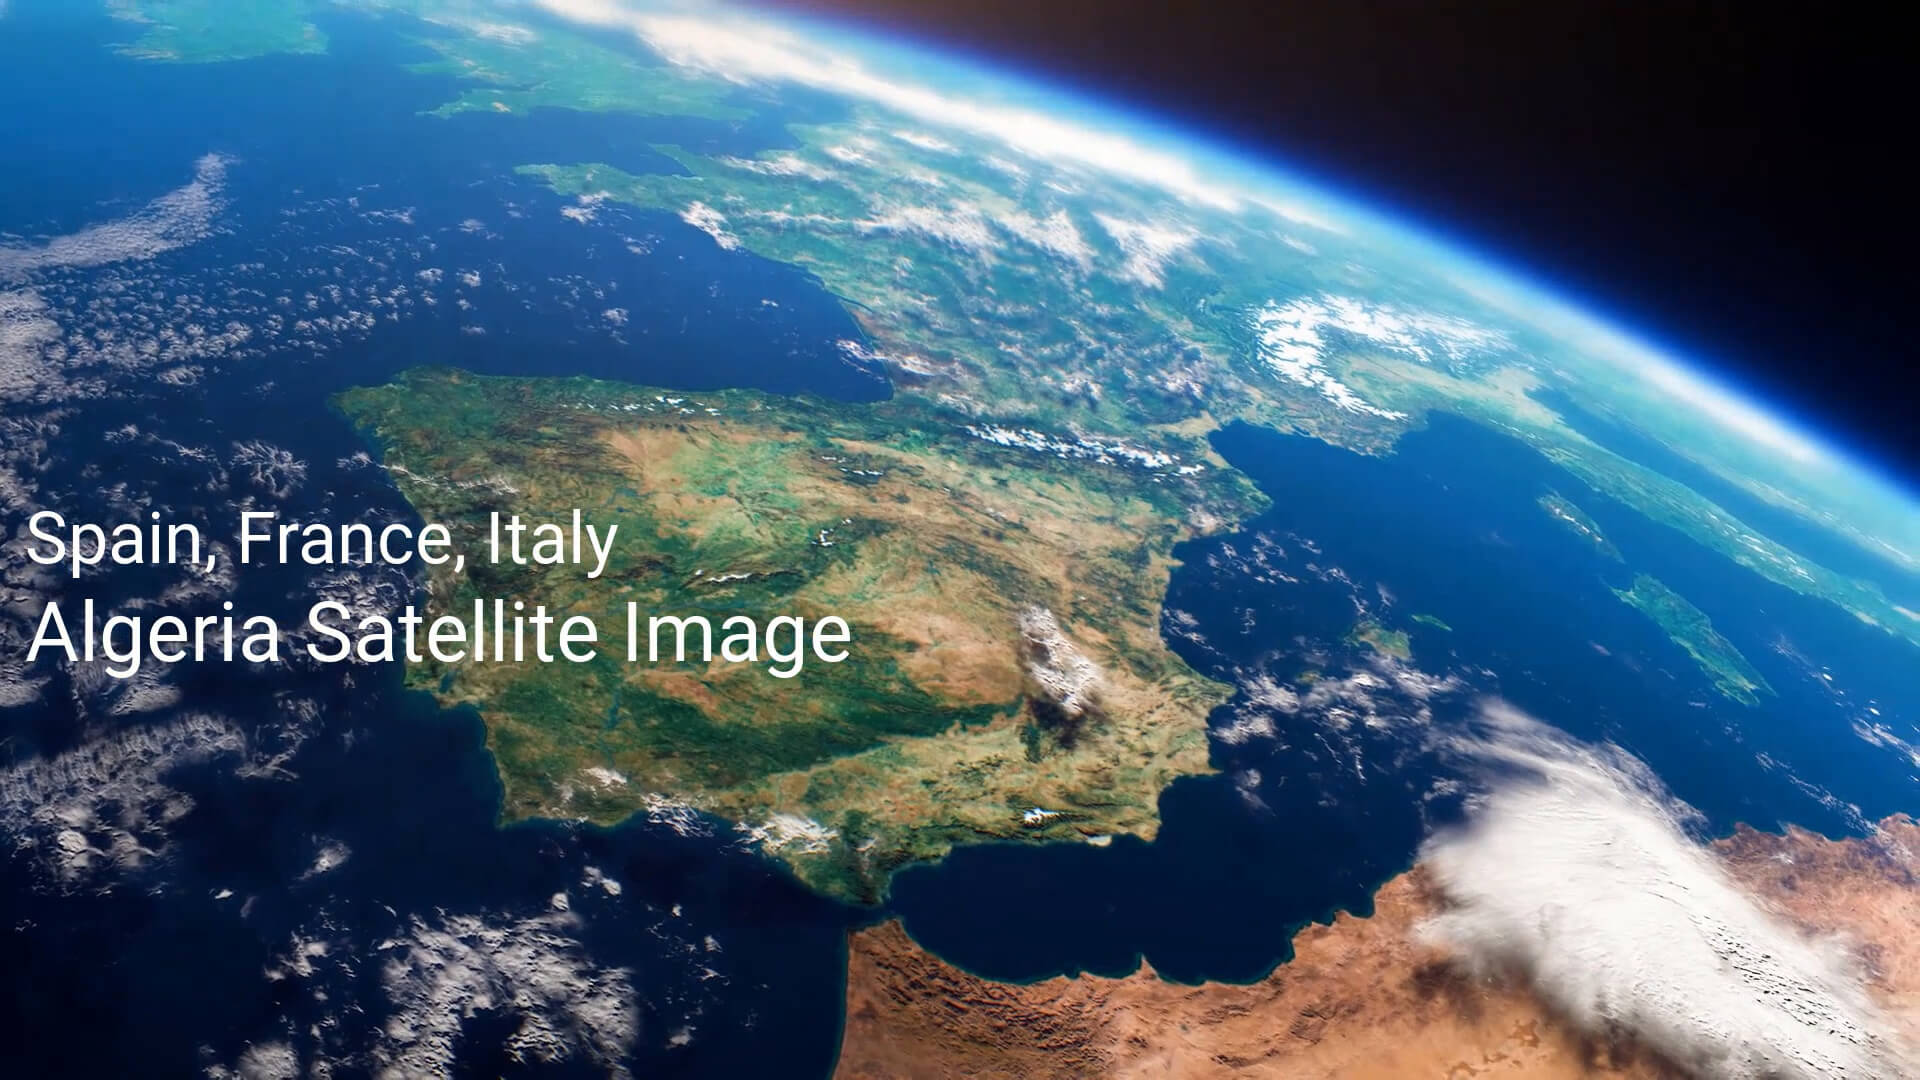 Spain France Italy and Algeria Satellite Image